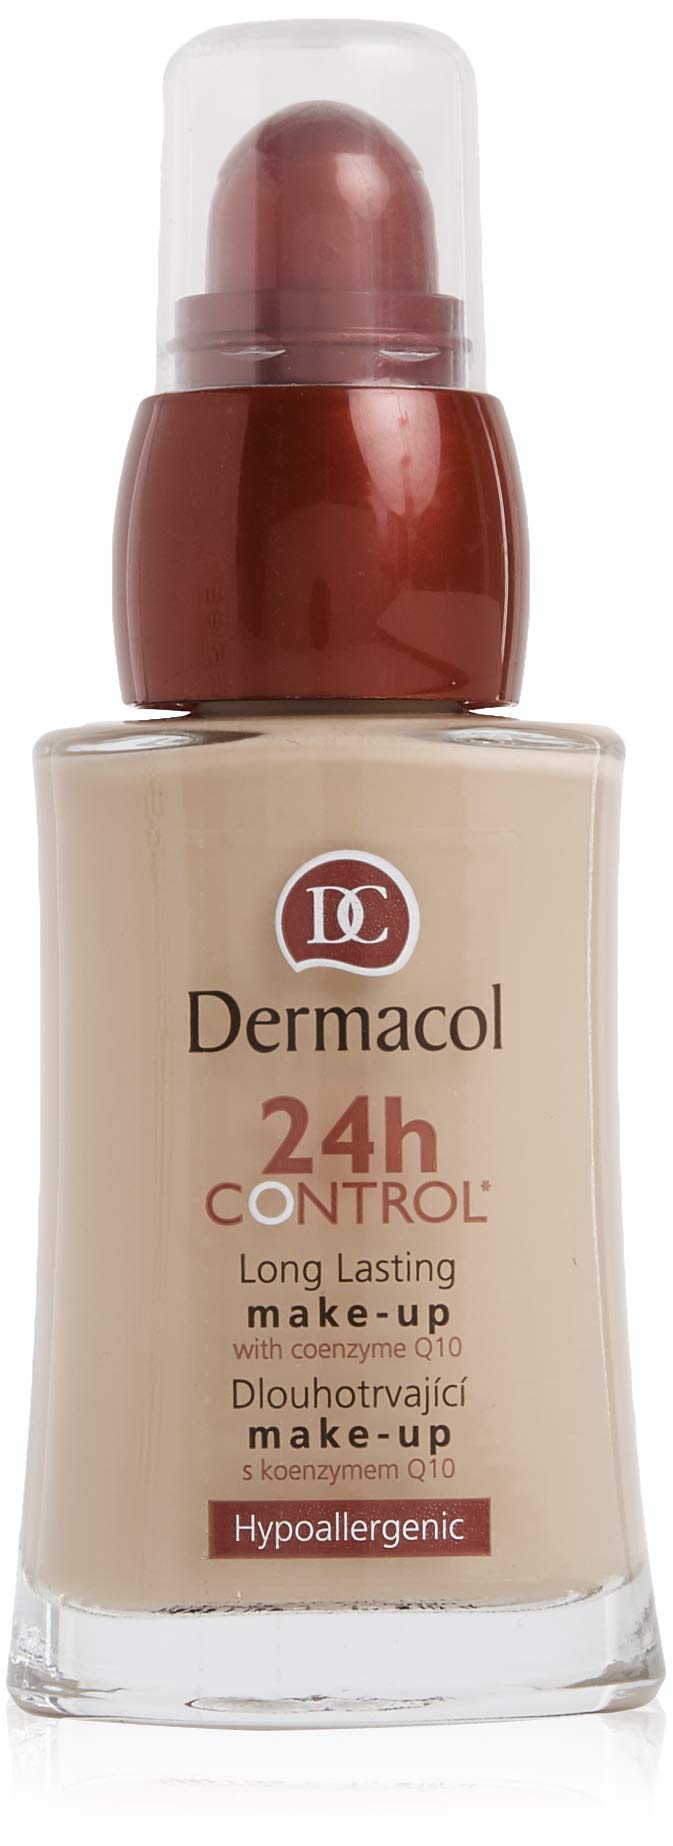 DERMACOL 24H CONTROL LONG LASTING MAKE-UP - NO.2